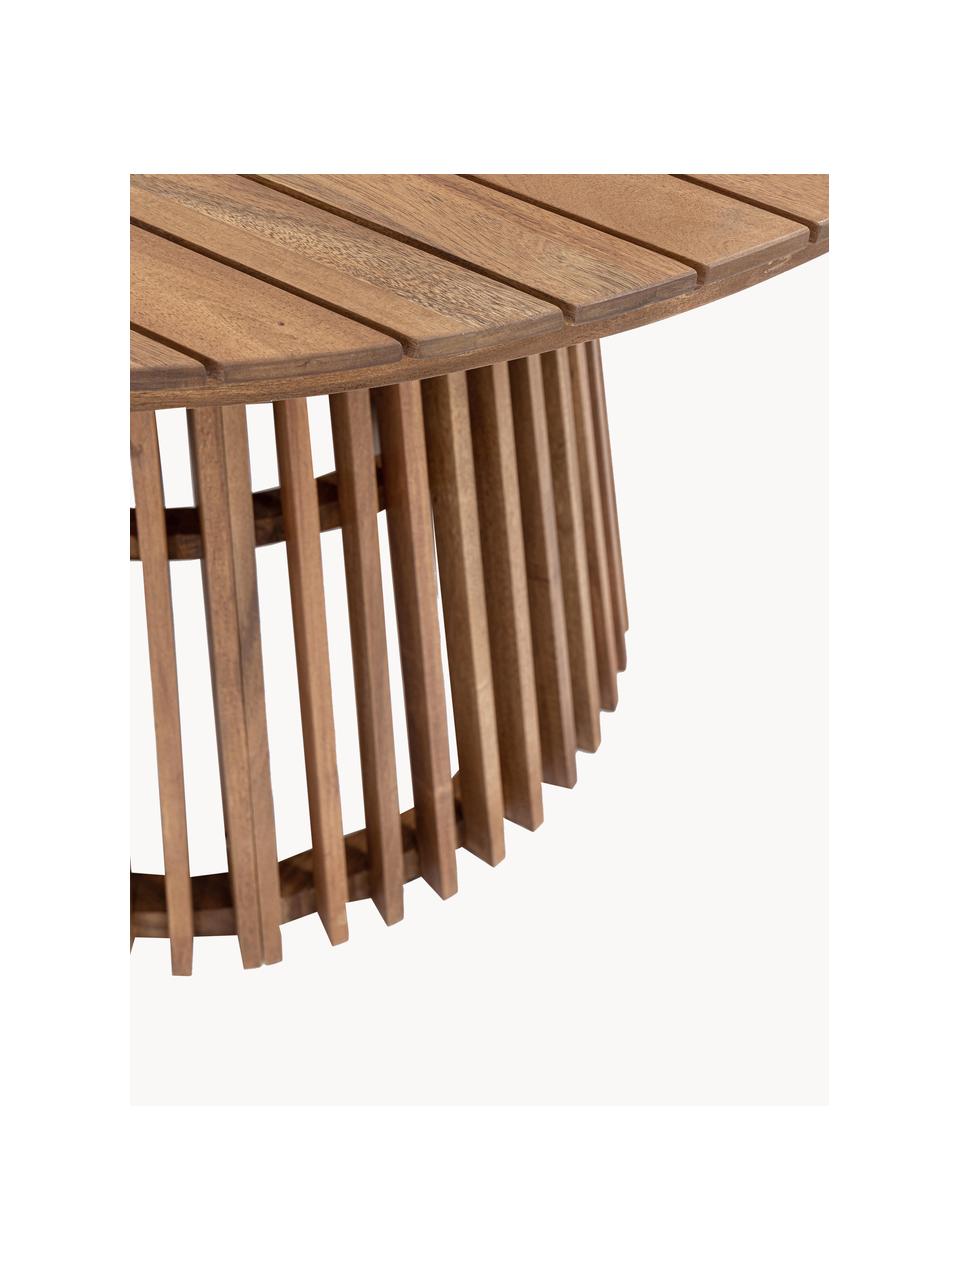 Kulatý zahradní stůl z akáciového dřeva Rodano, Ø 120 cm, Tmavé dřevo, Tmavé dřevo, Ø 120 cm, V 74 cm